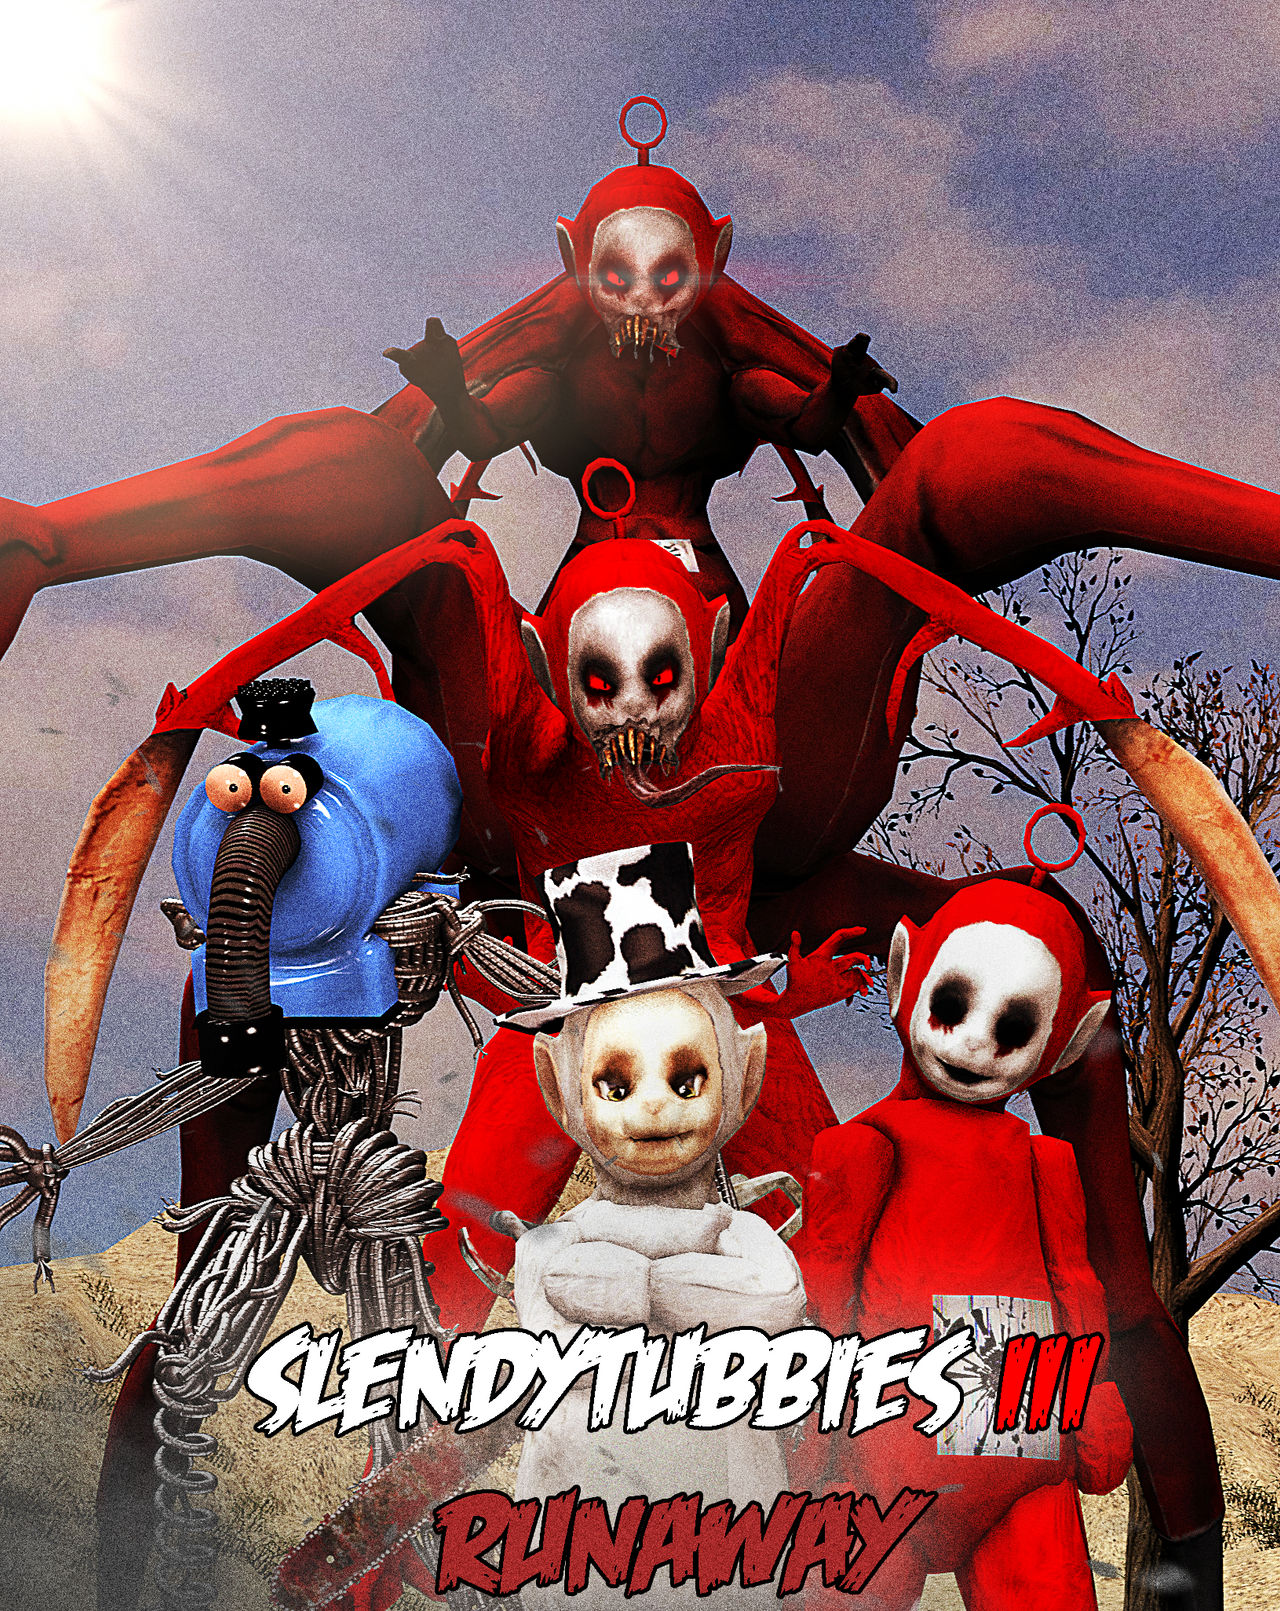 Slendytubbies (Video Game) - TV Tropes